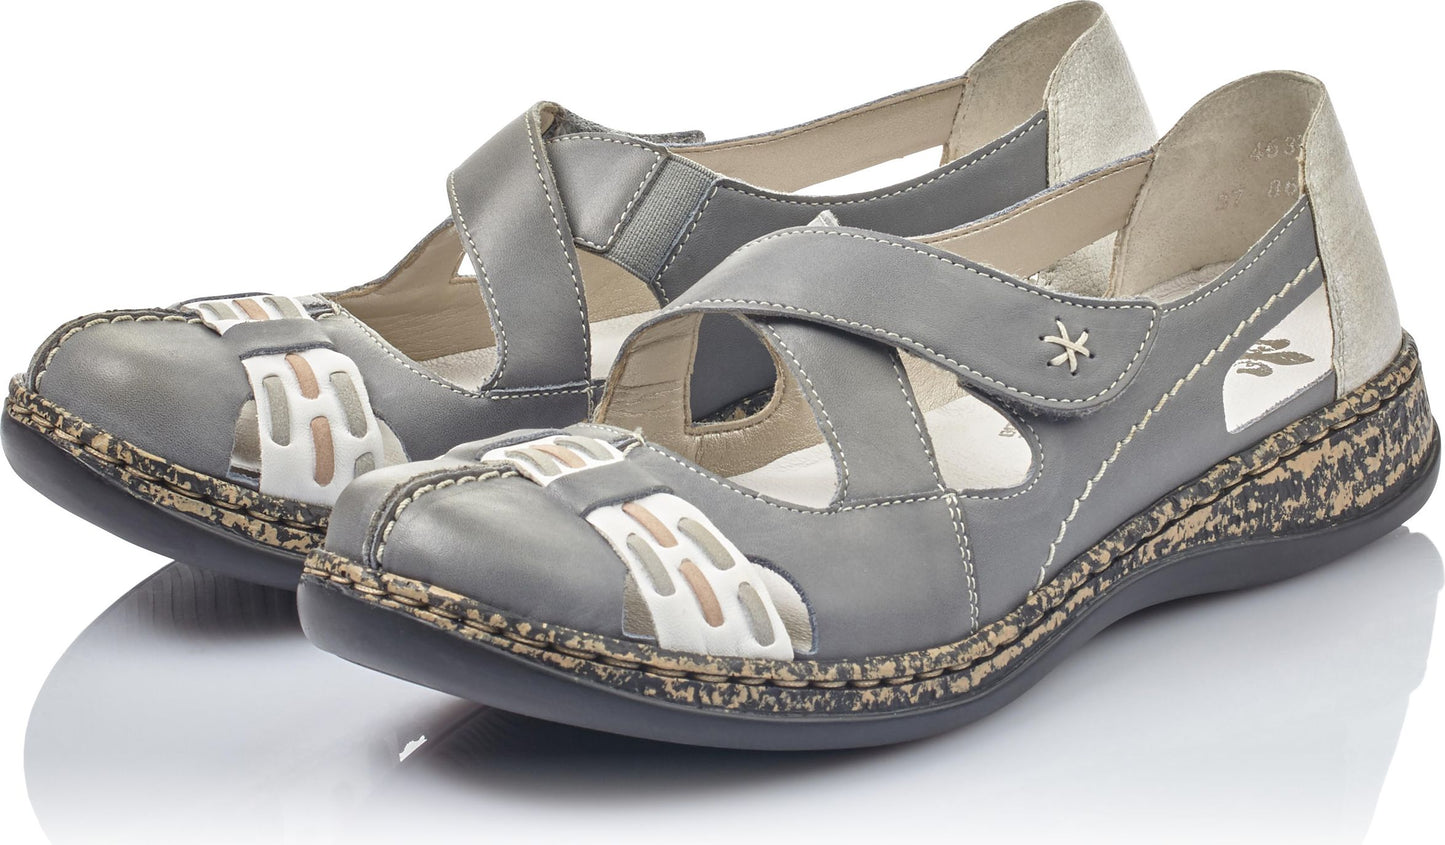 Rieker Shoes Grey Criss Cross Velcro Shoe